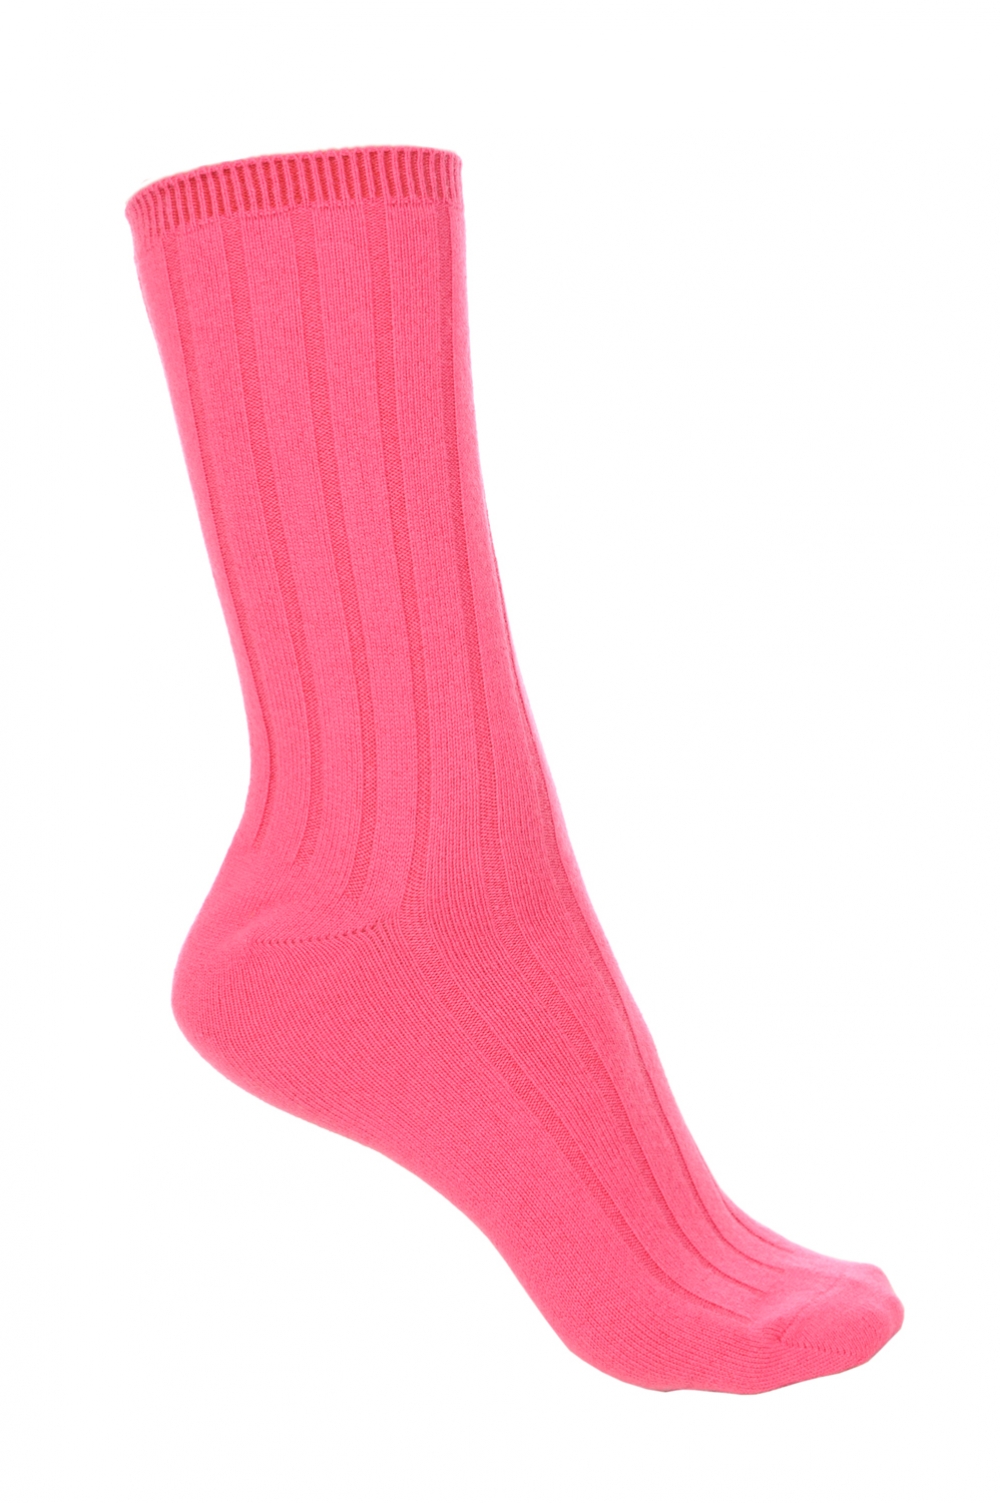 Cashmere & Elastane accessories socks dragibus w shocking pink 5 5 8 39 42 